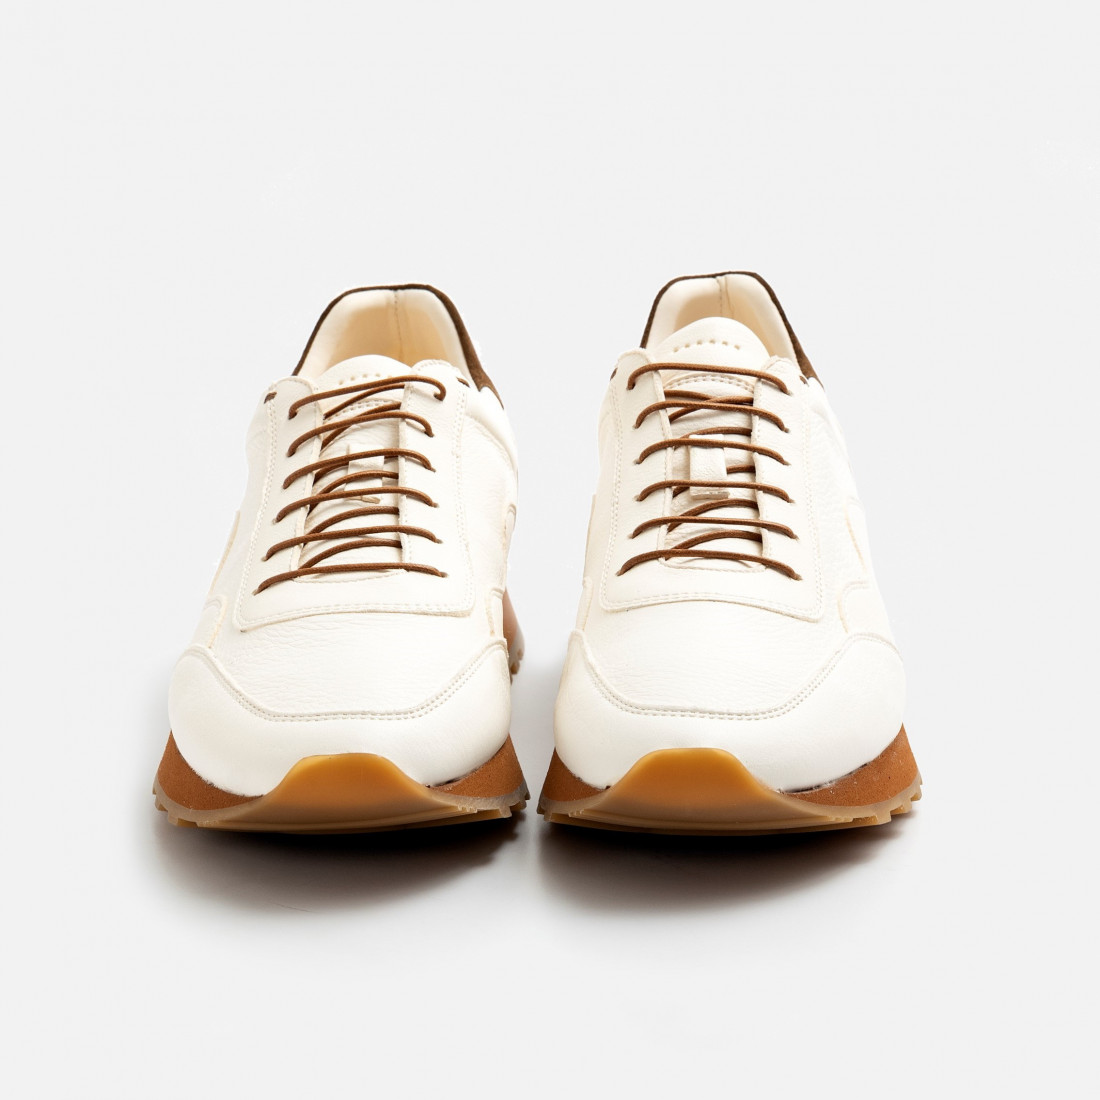 Sturlini Runners men's shoe in soft white leather